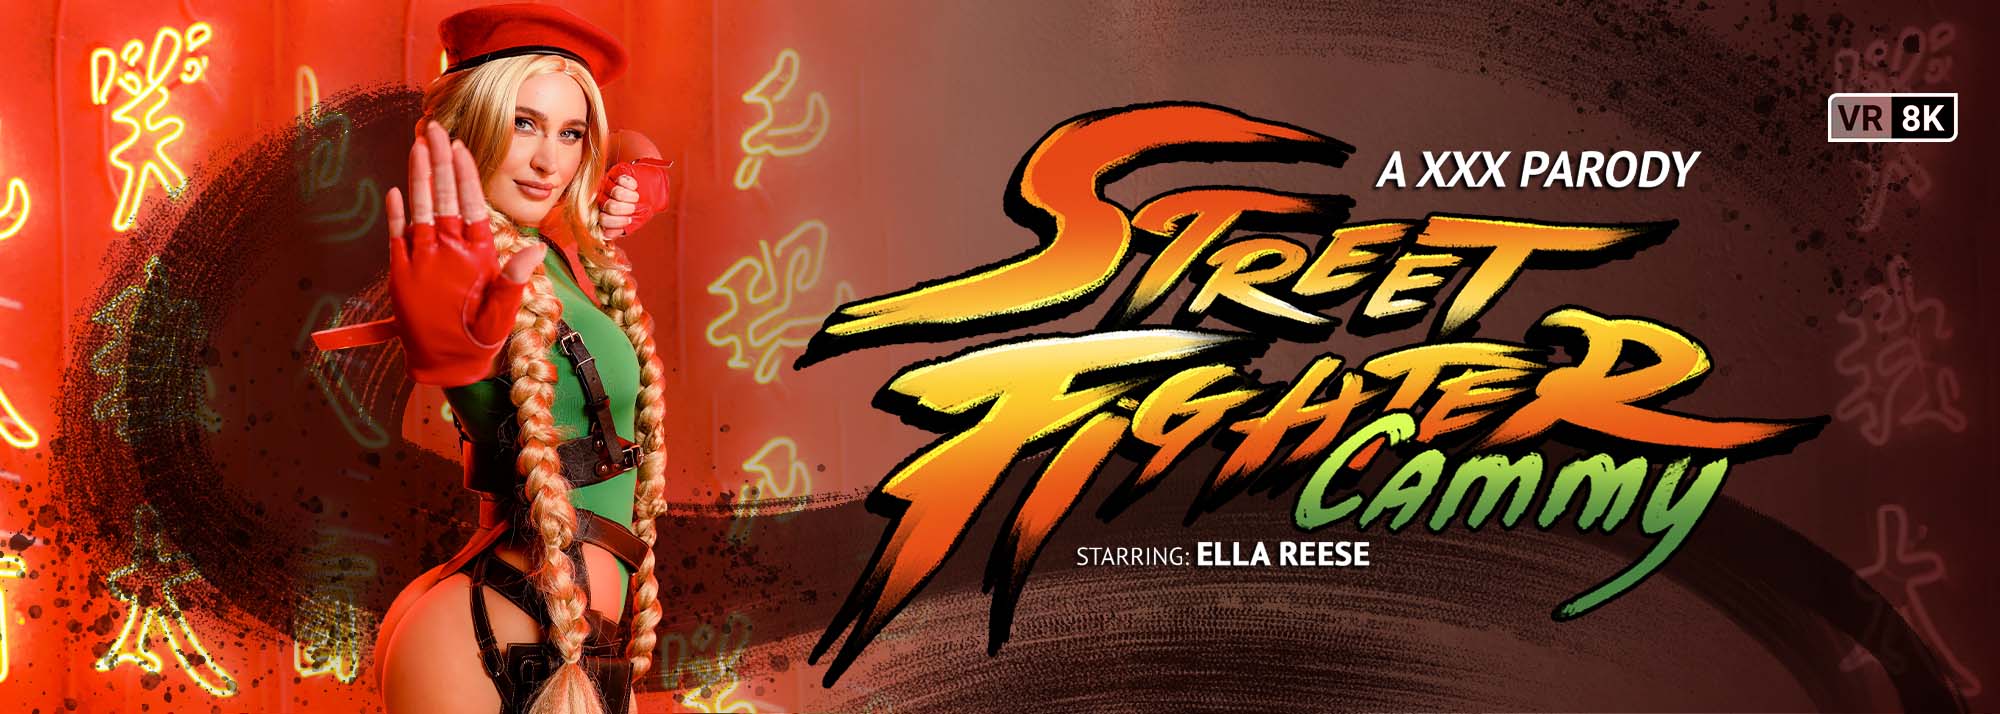 Street Fighter: Cammy (A XXX Parody) - VR Porn Video, Starring: Ella Reese VR